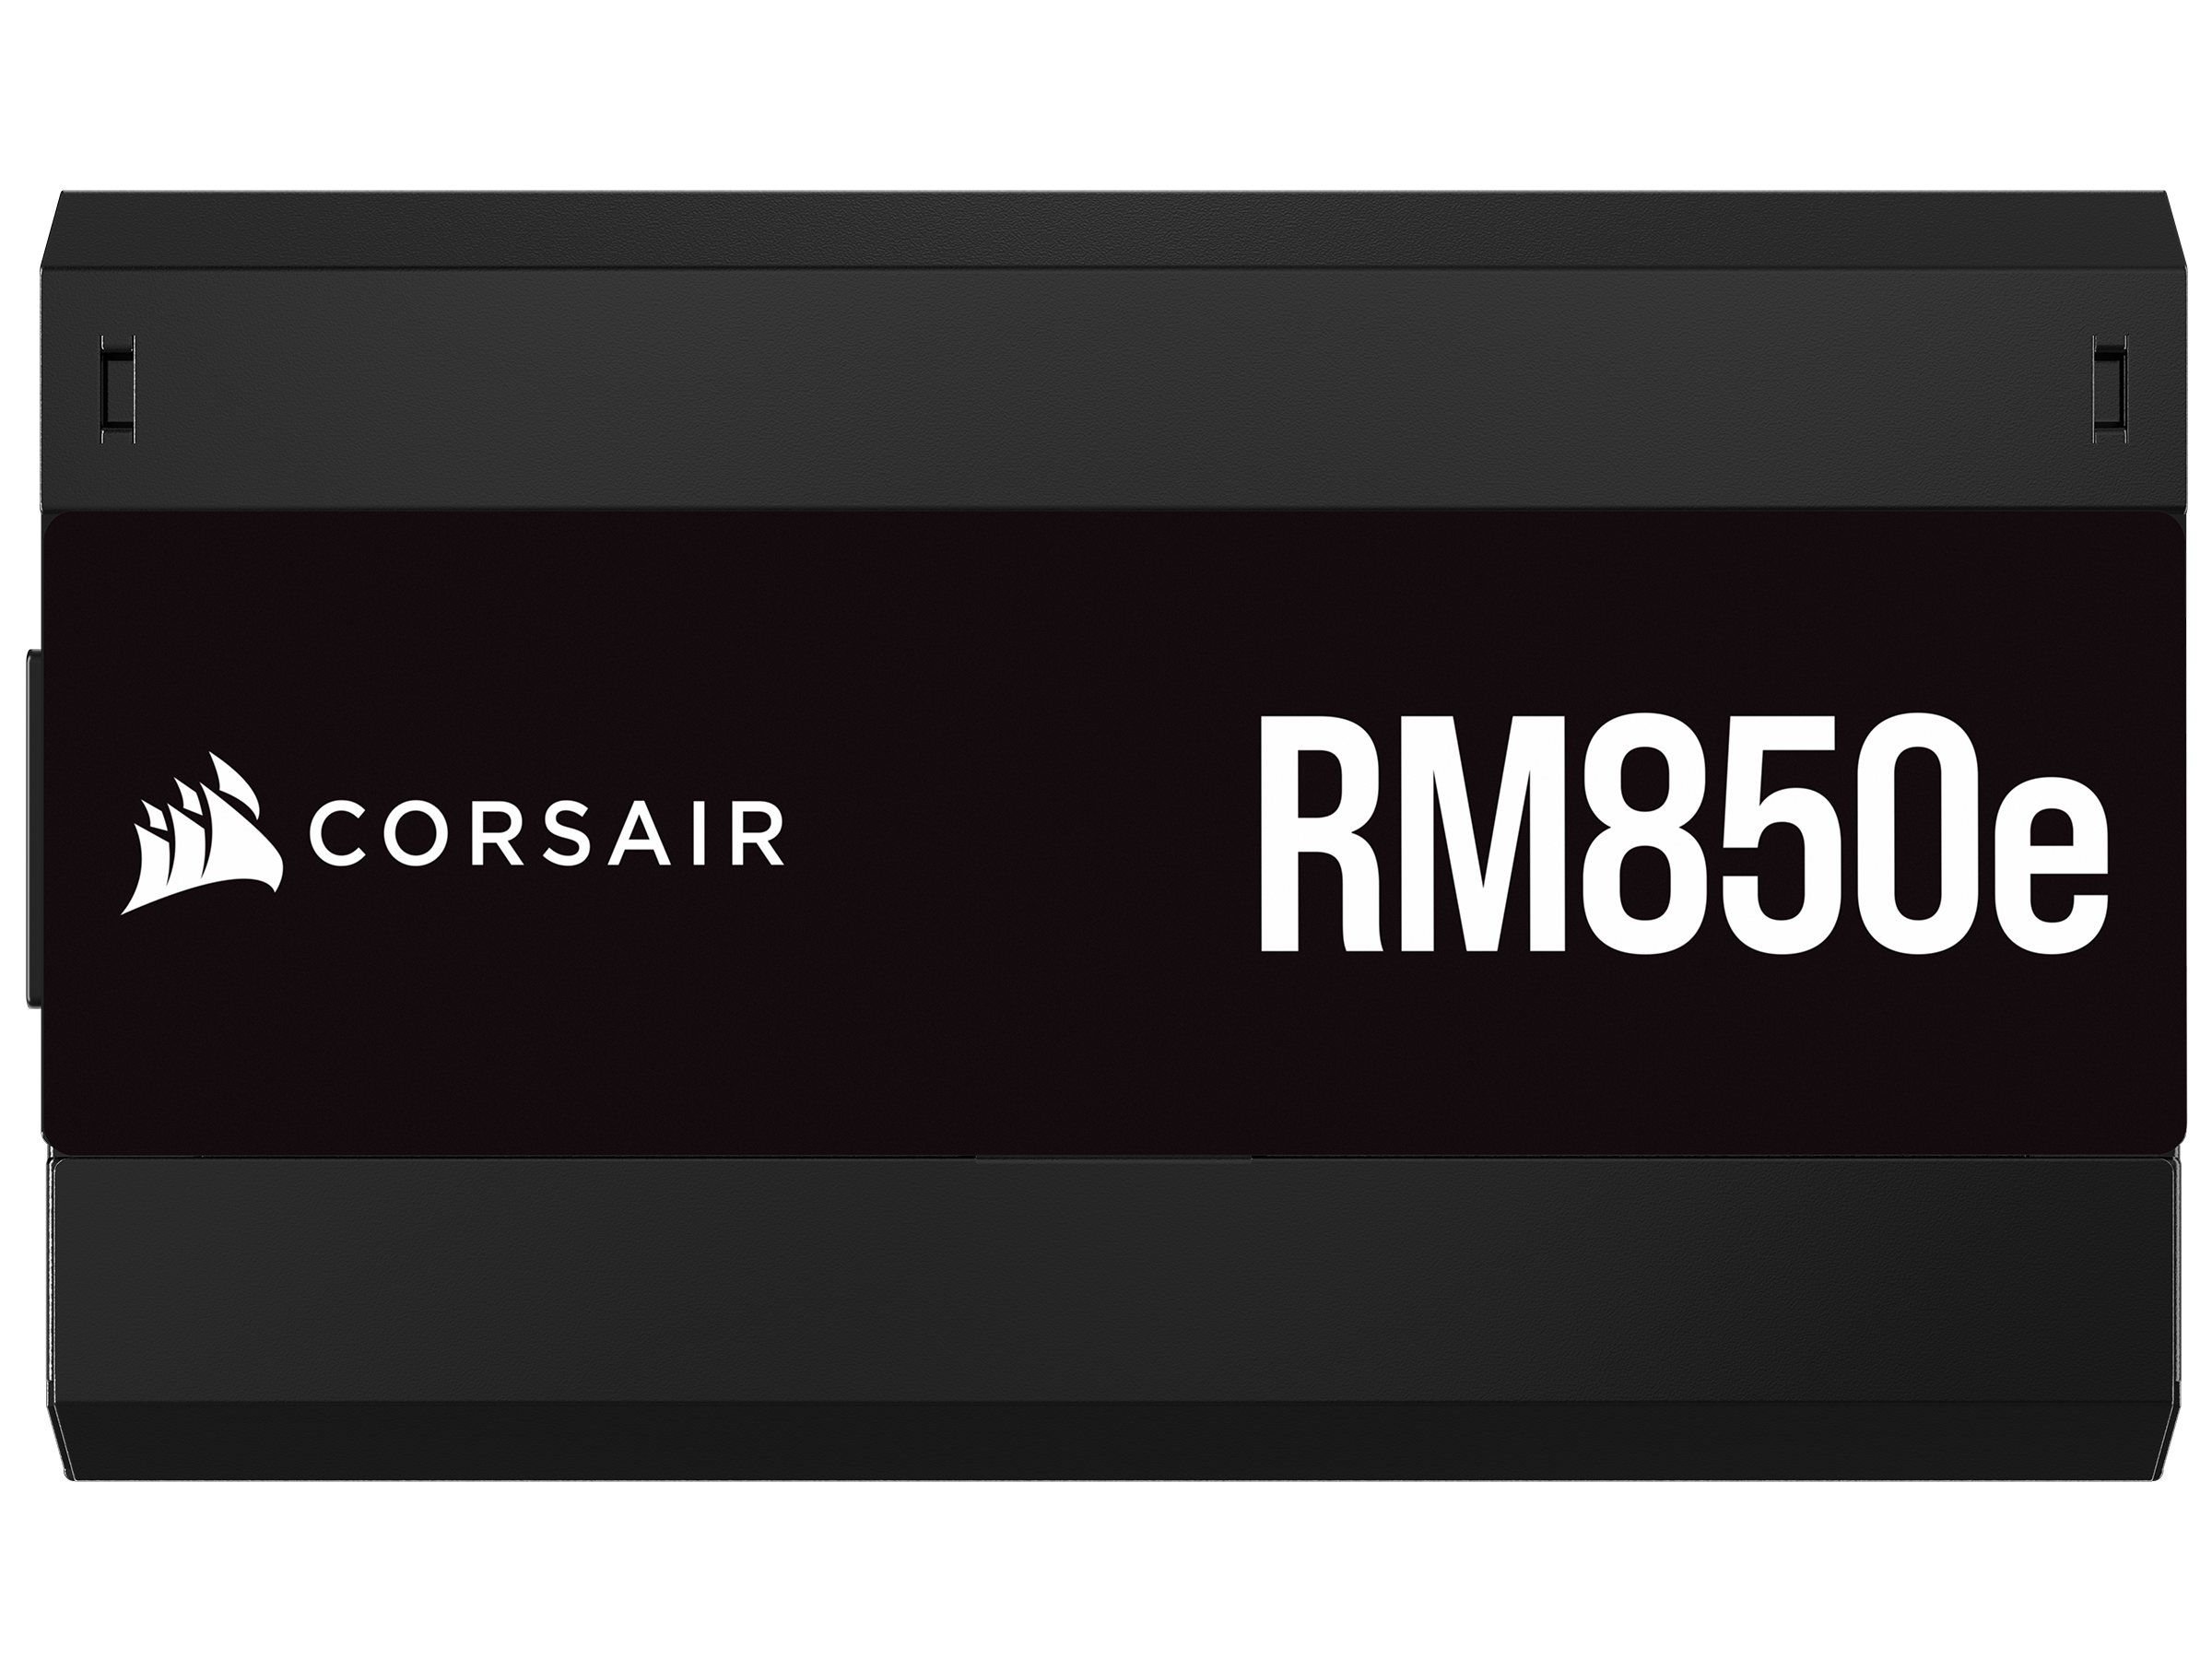 CORSAIR - Corsair RMe Series RM850e Fully Modular Low-Noise ATX Power Supply v2 (CP-9020263-UK)